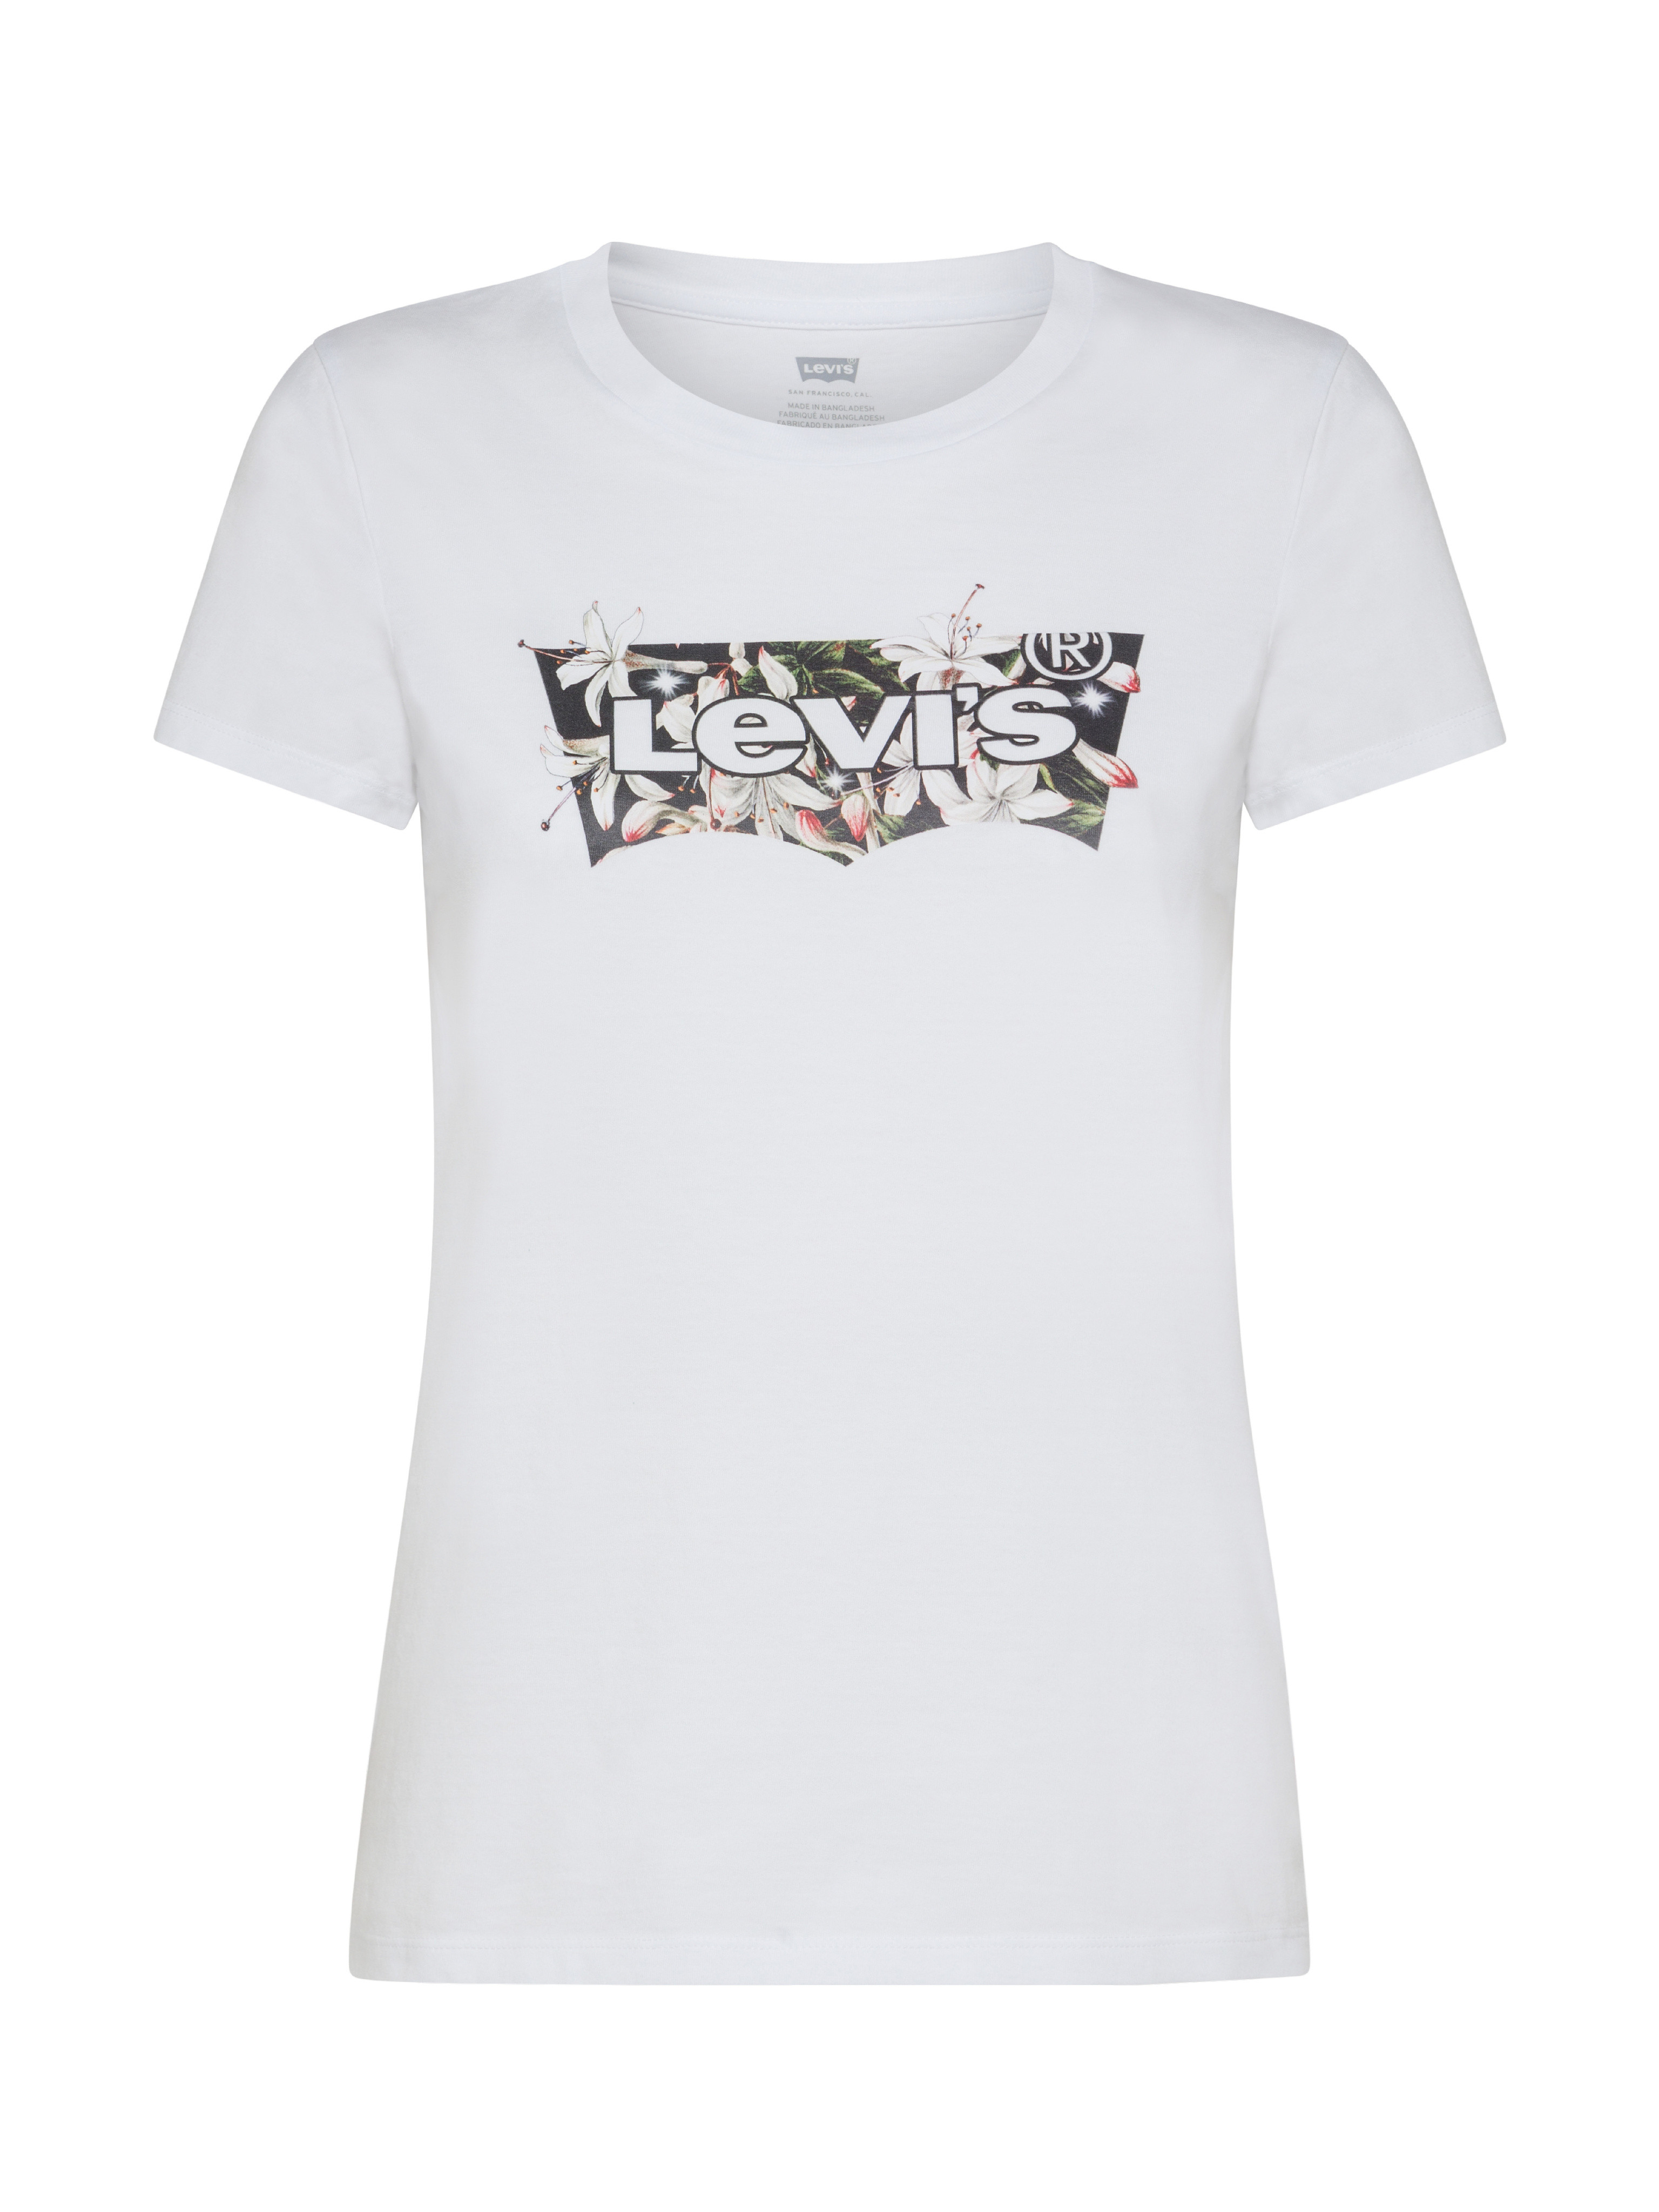 Levi's - T-shirt con logo floreale, Bianco, large image number 0